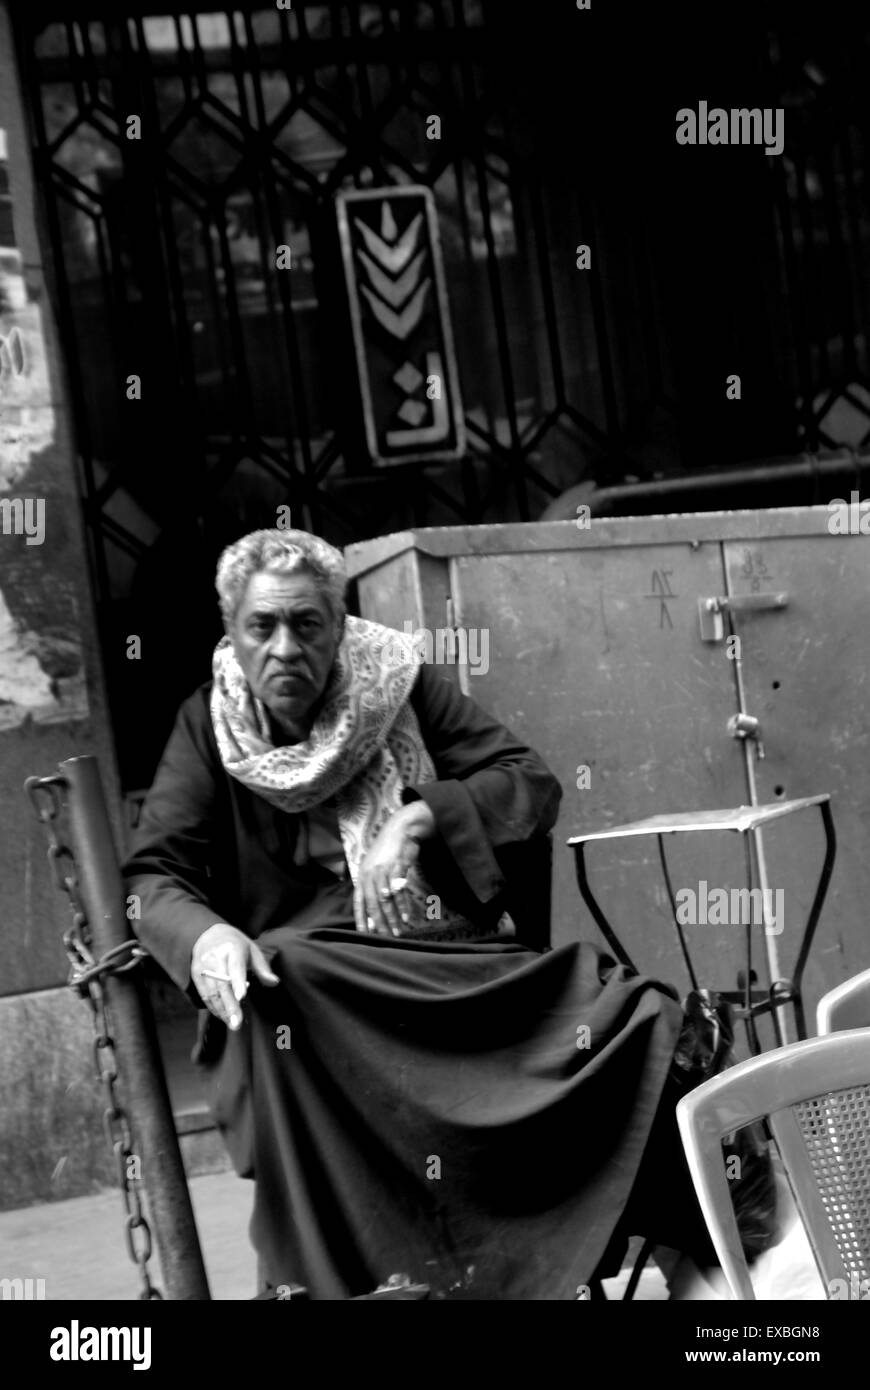 Arab man sitting in Cairo street Stock Photo